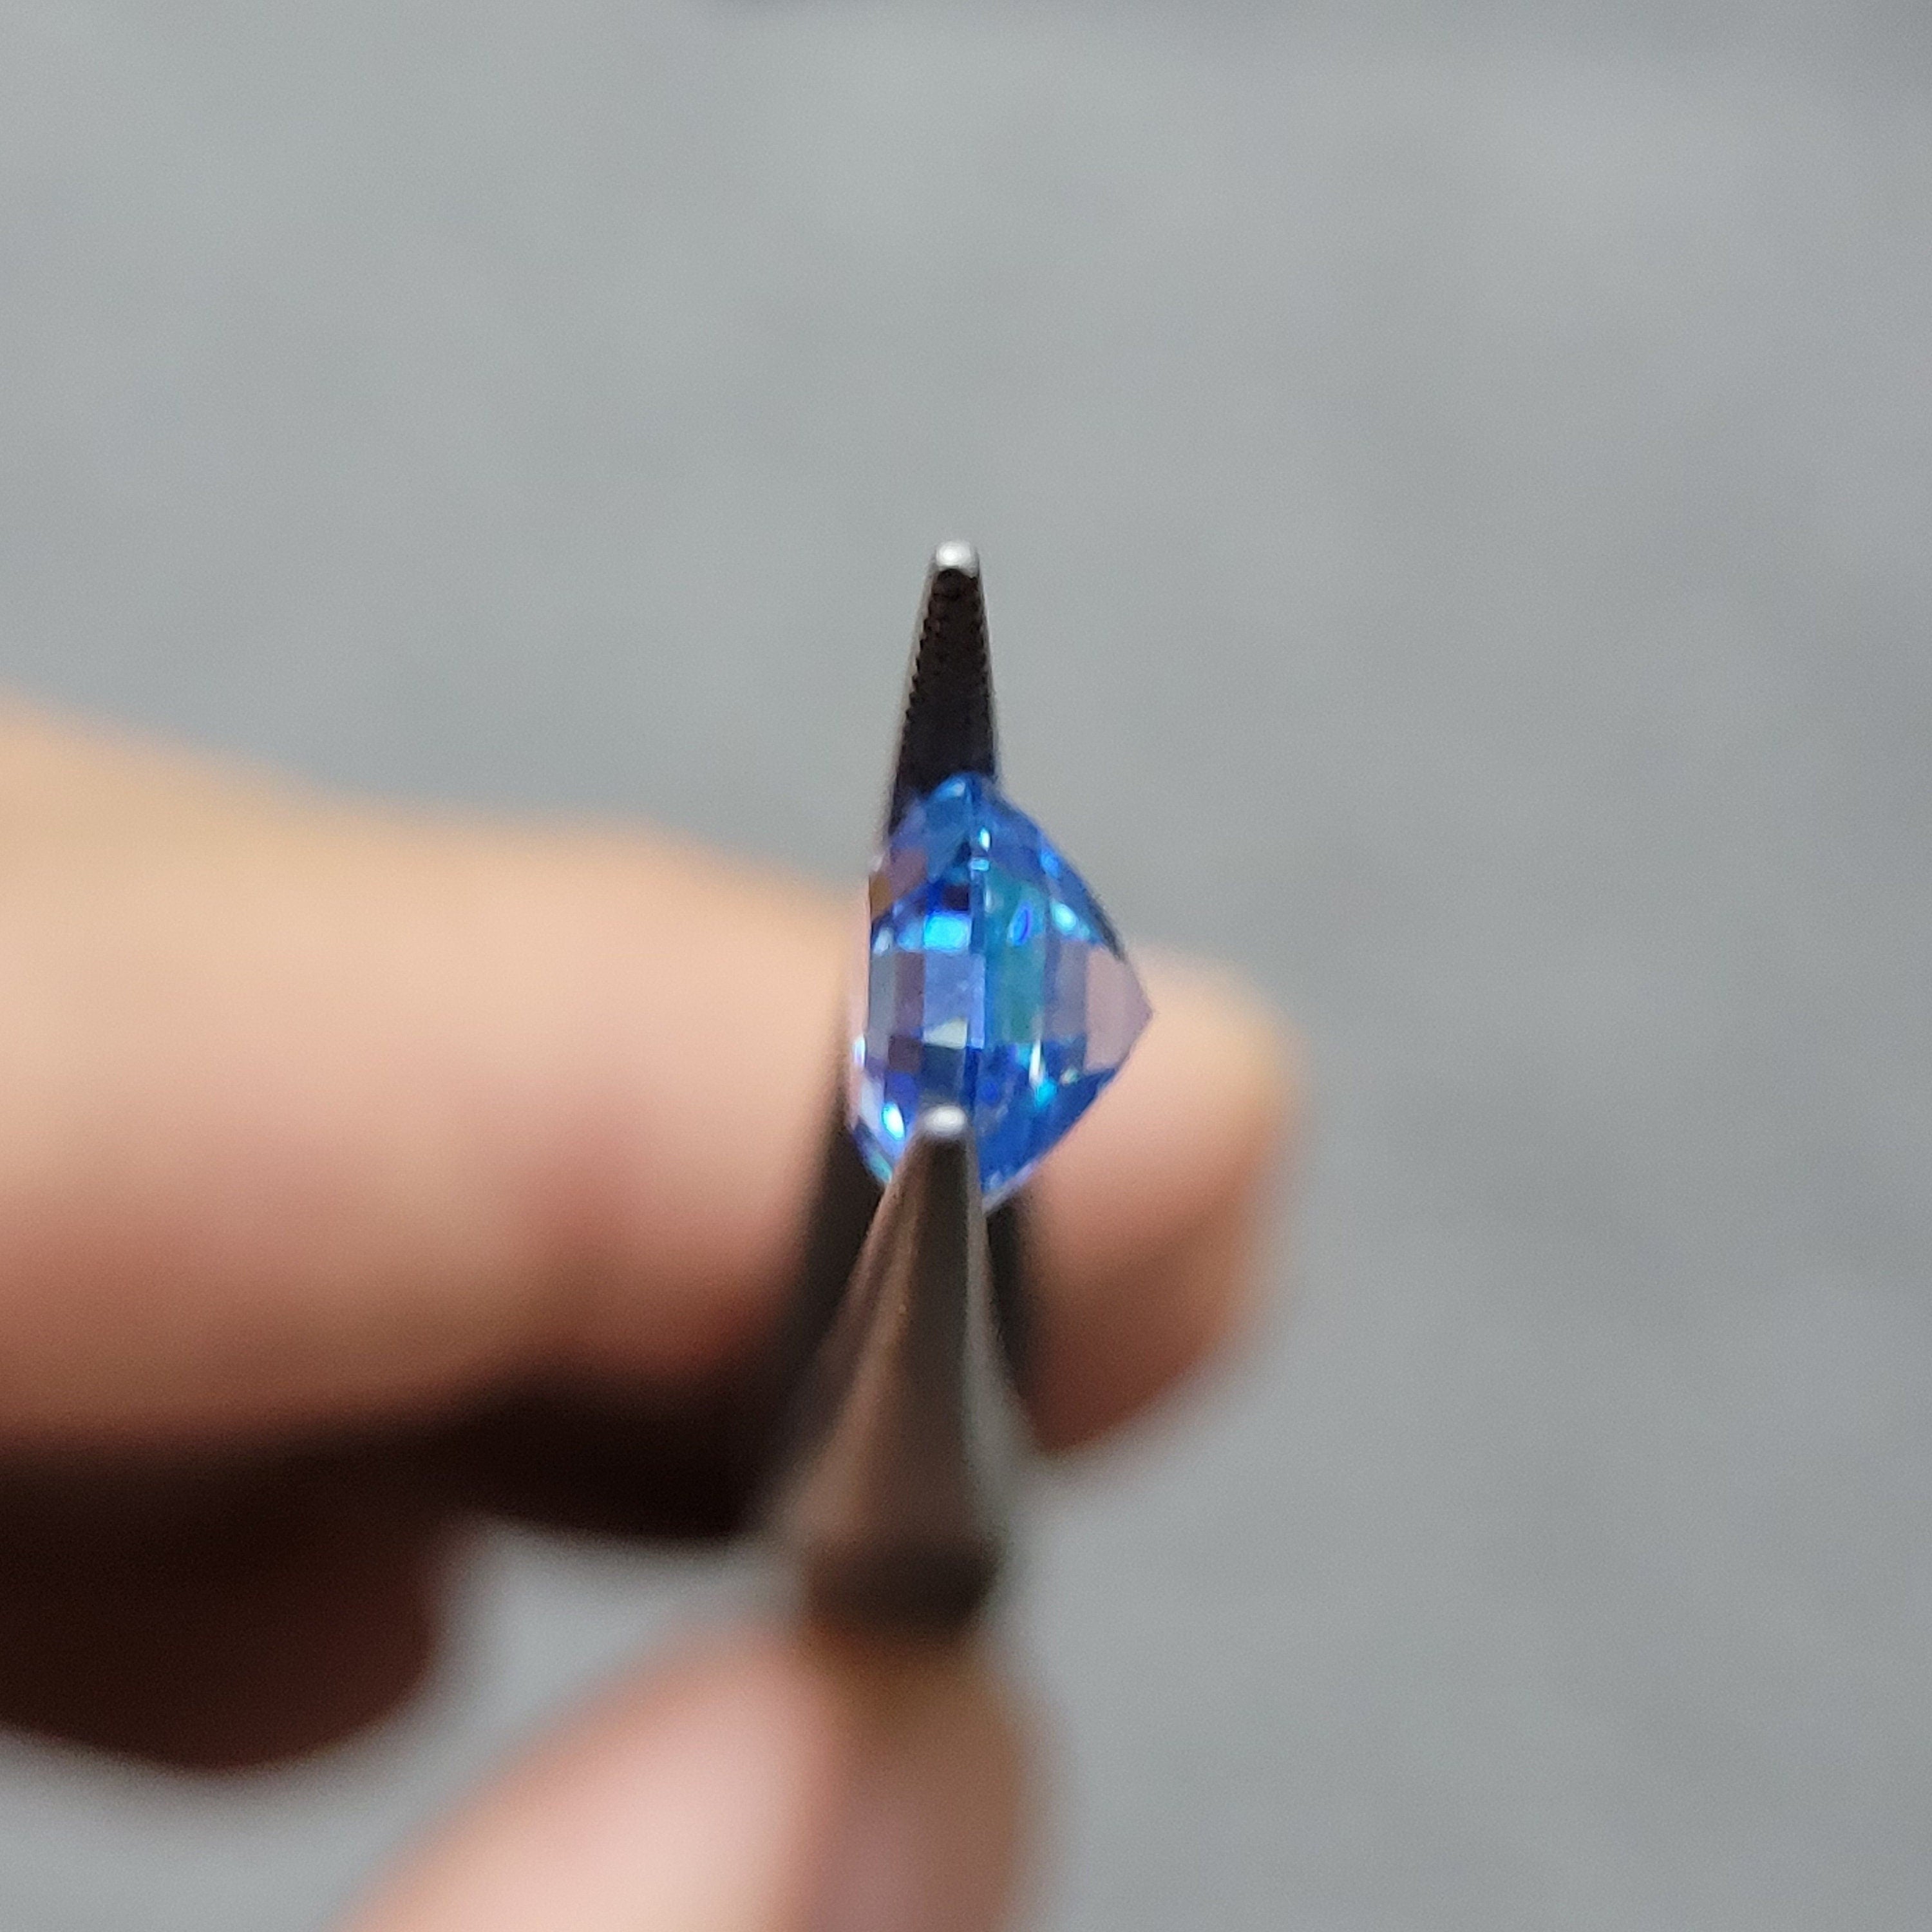 7mm 2ct loose moissanite certified vvs1 klein blue octagon cut gra laboratory gemstone